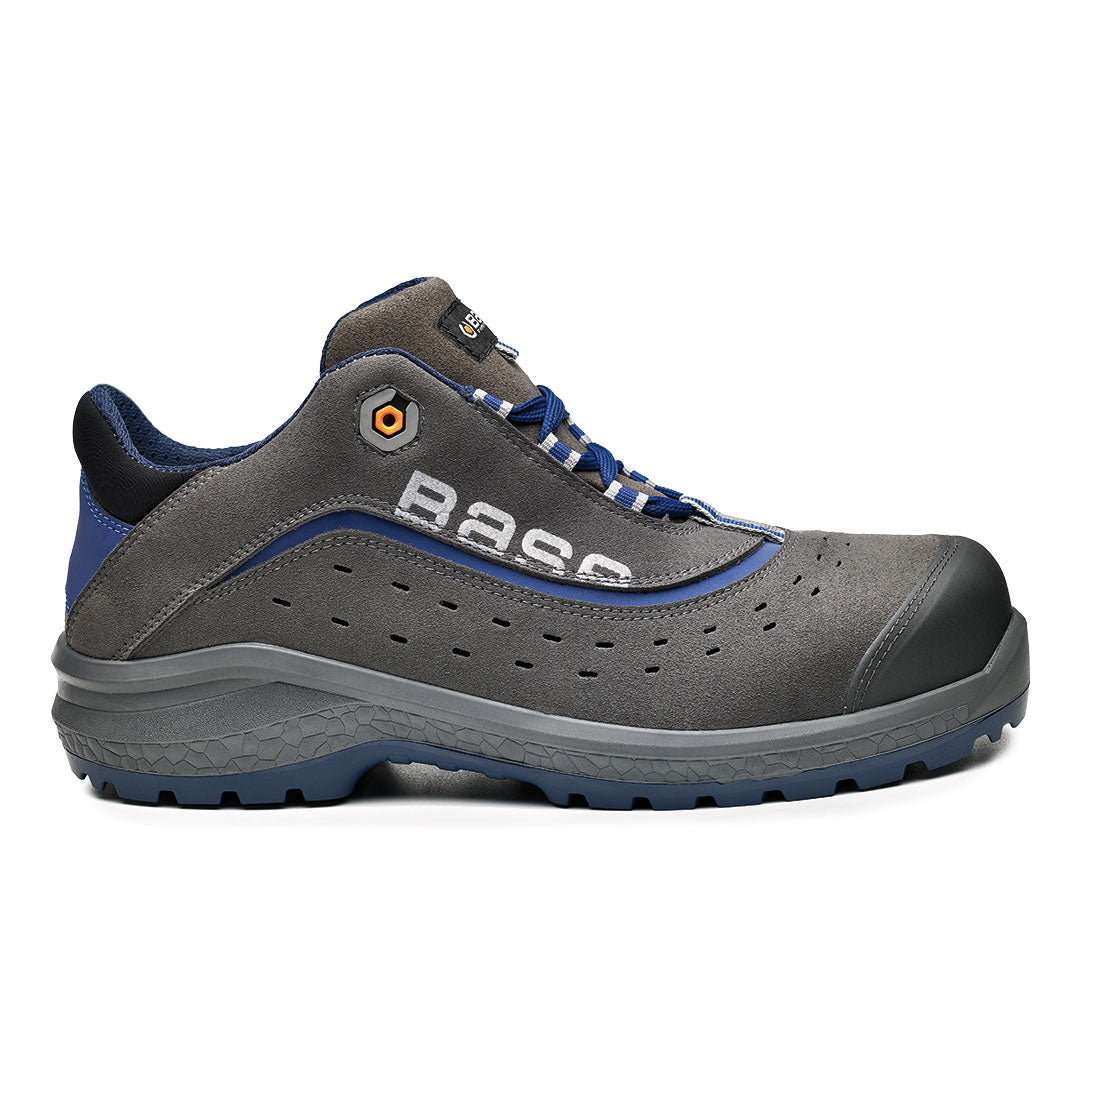 Base Be-Light Safety Shoes S1P SRC